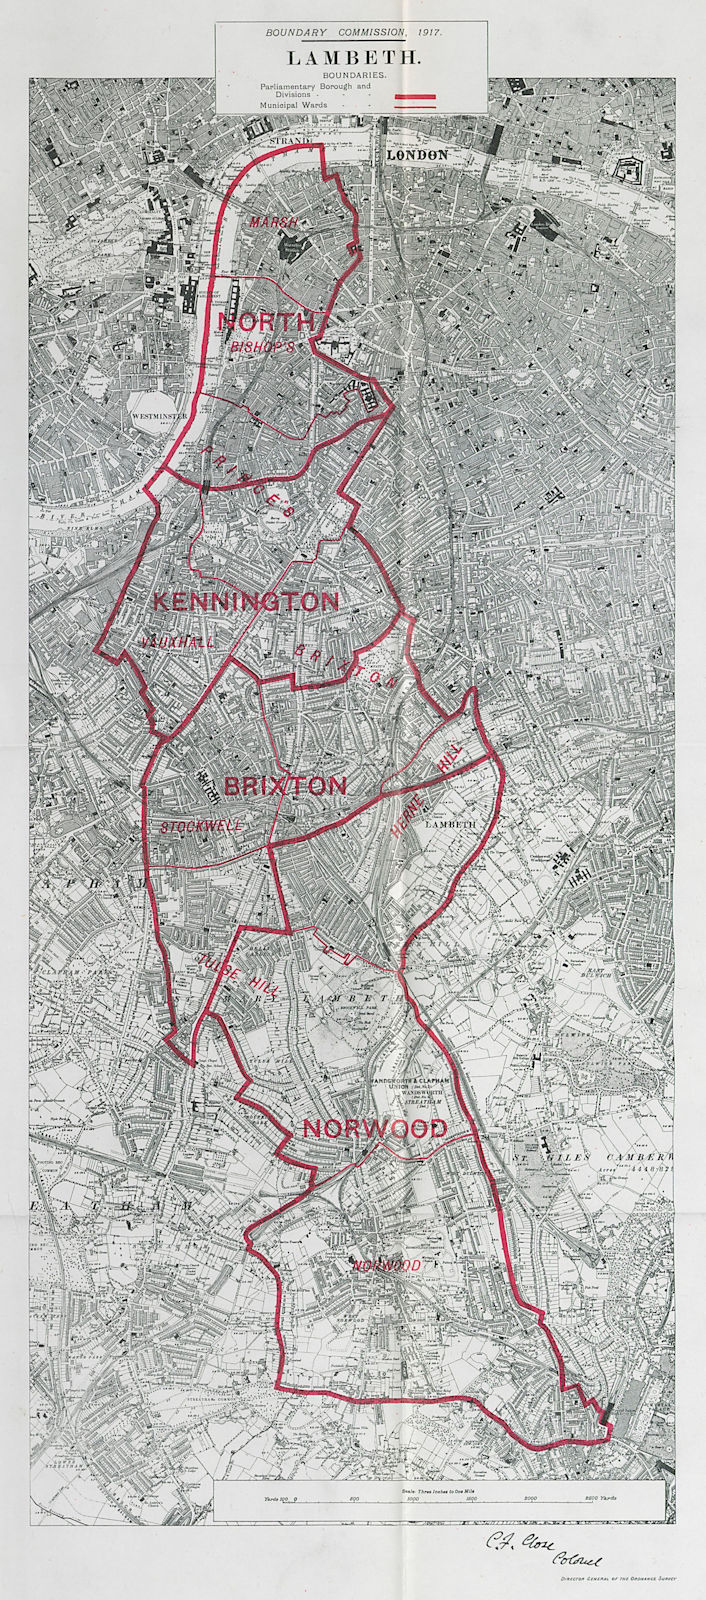 Lambeth Parliamentary Borough. Brixton Norwood. BOUNDARY COMMISSION 1917 map